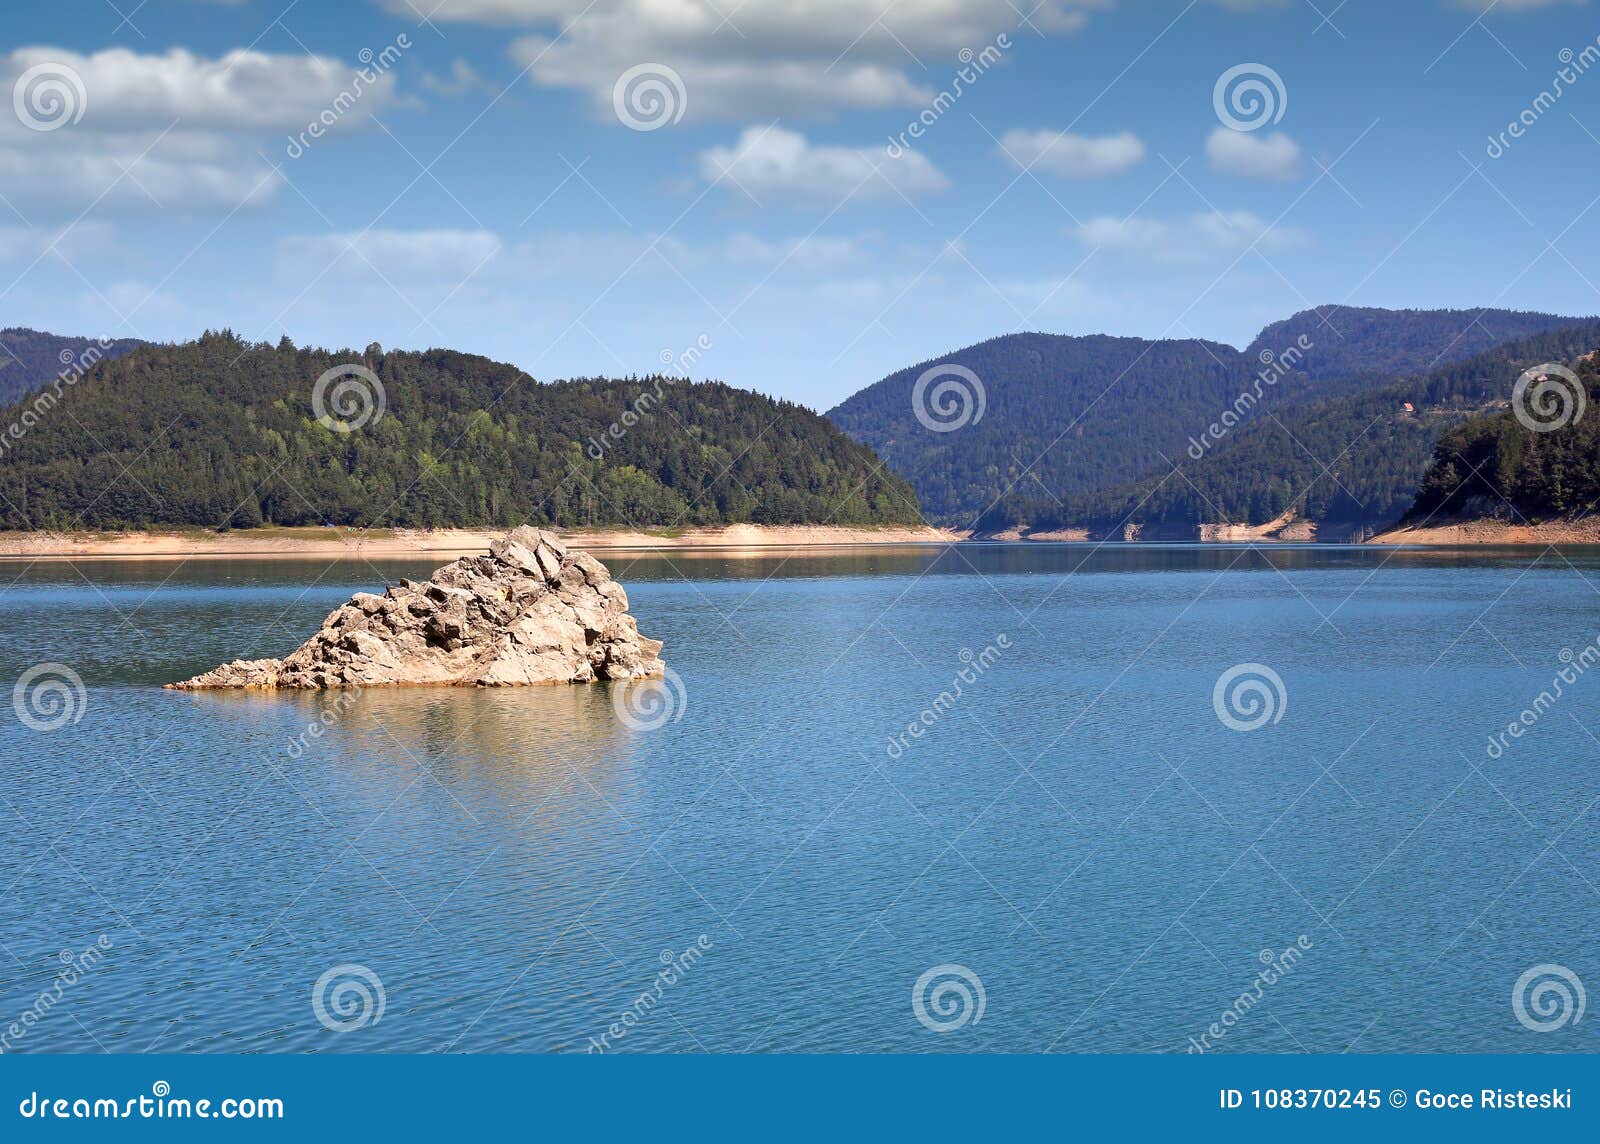 zaovine lake tara mountain serbia landscape